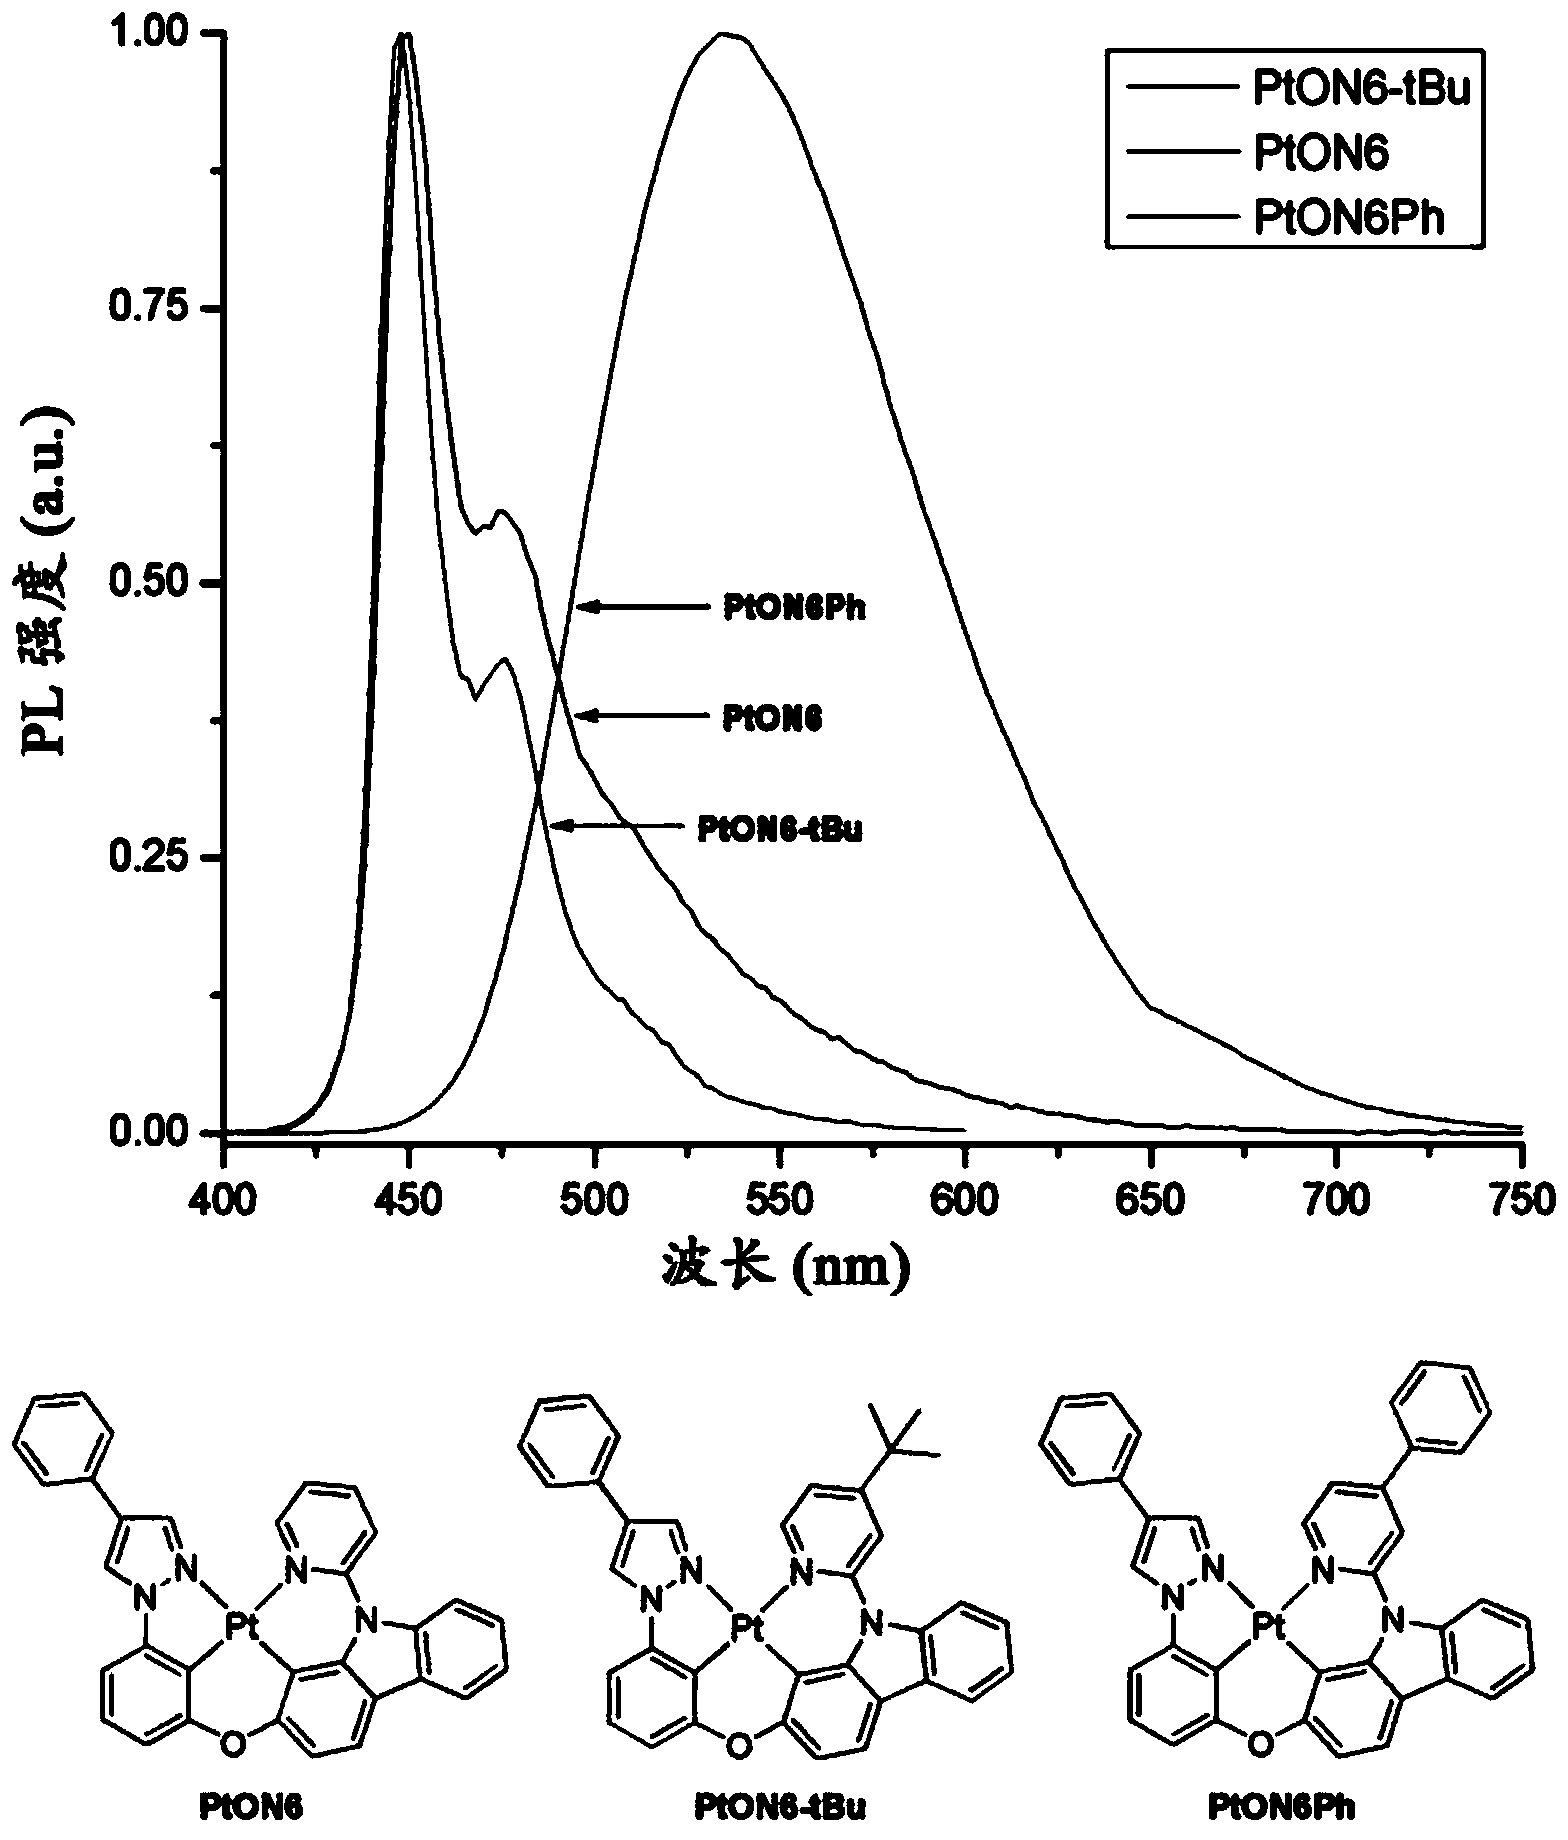 Phosphorescent tetradentate metal complexes having modified emission spectra